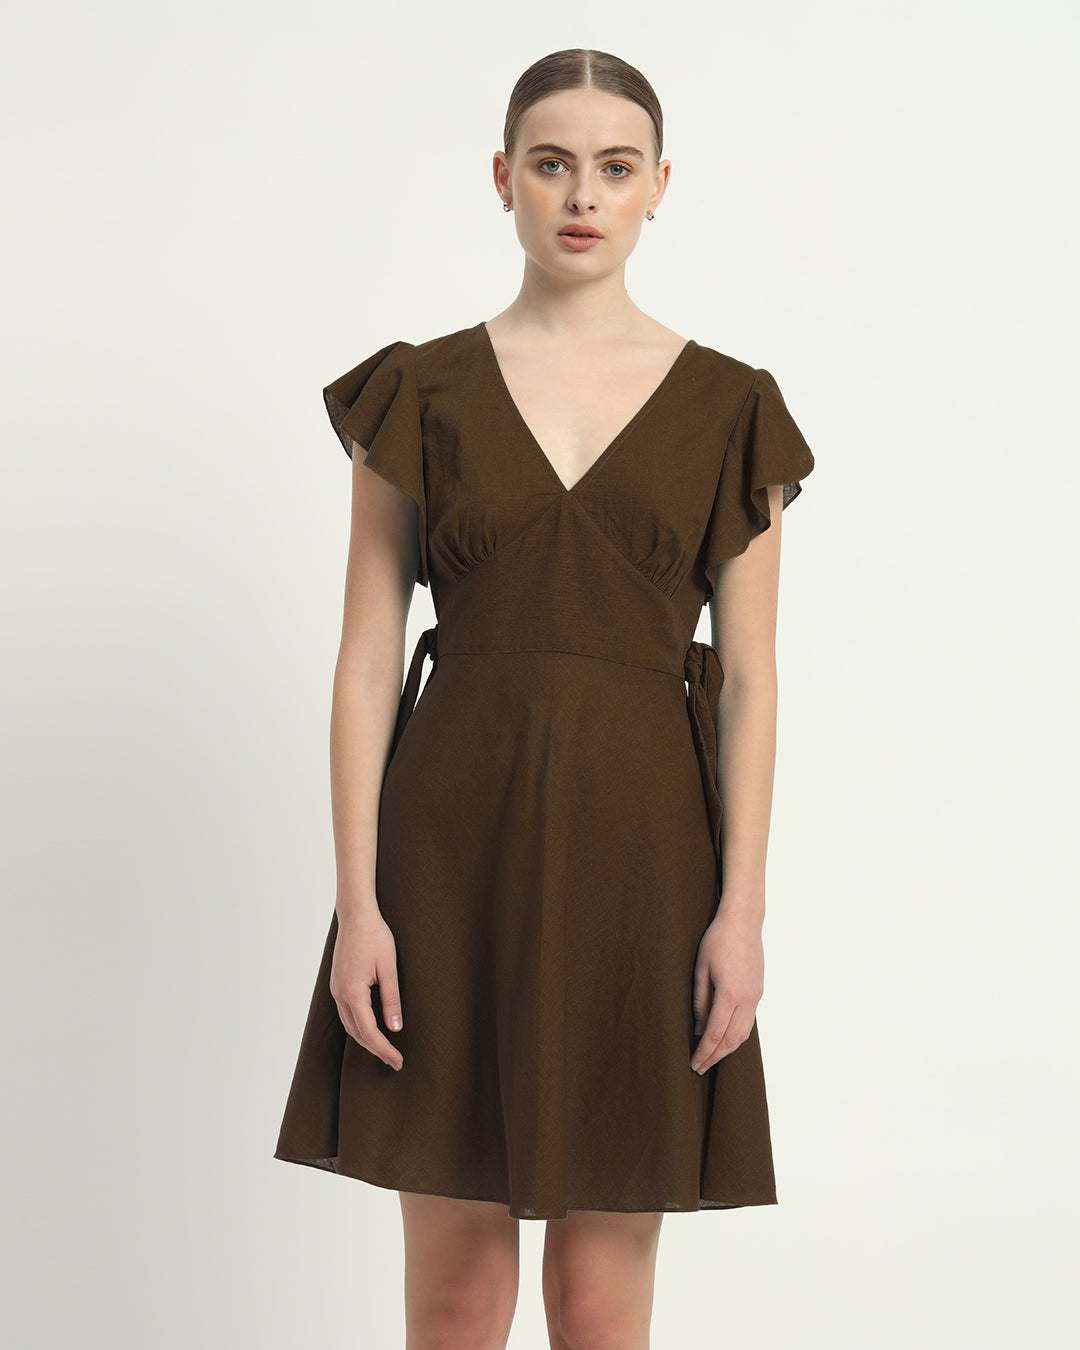 The Fairlie Nutshell Cotton Dress